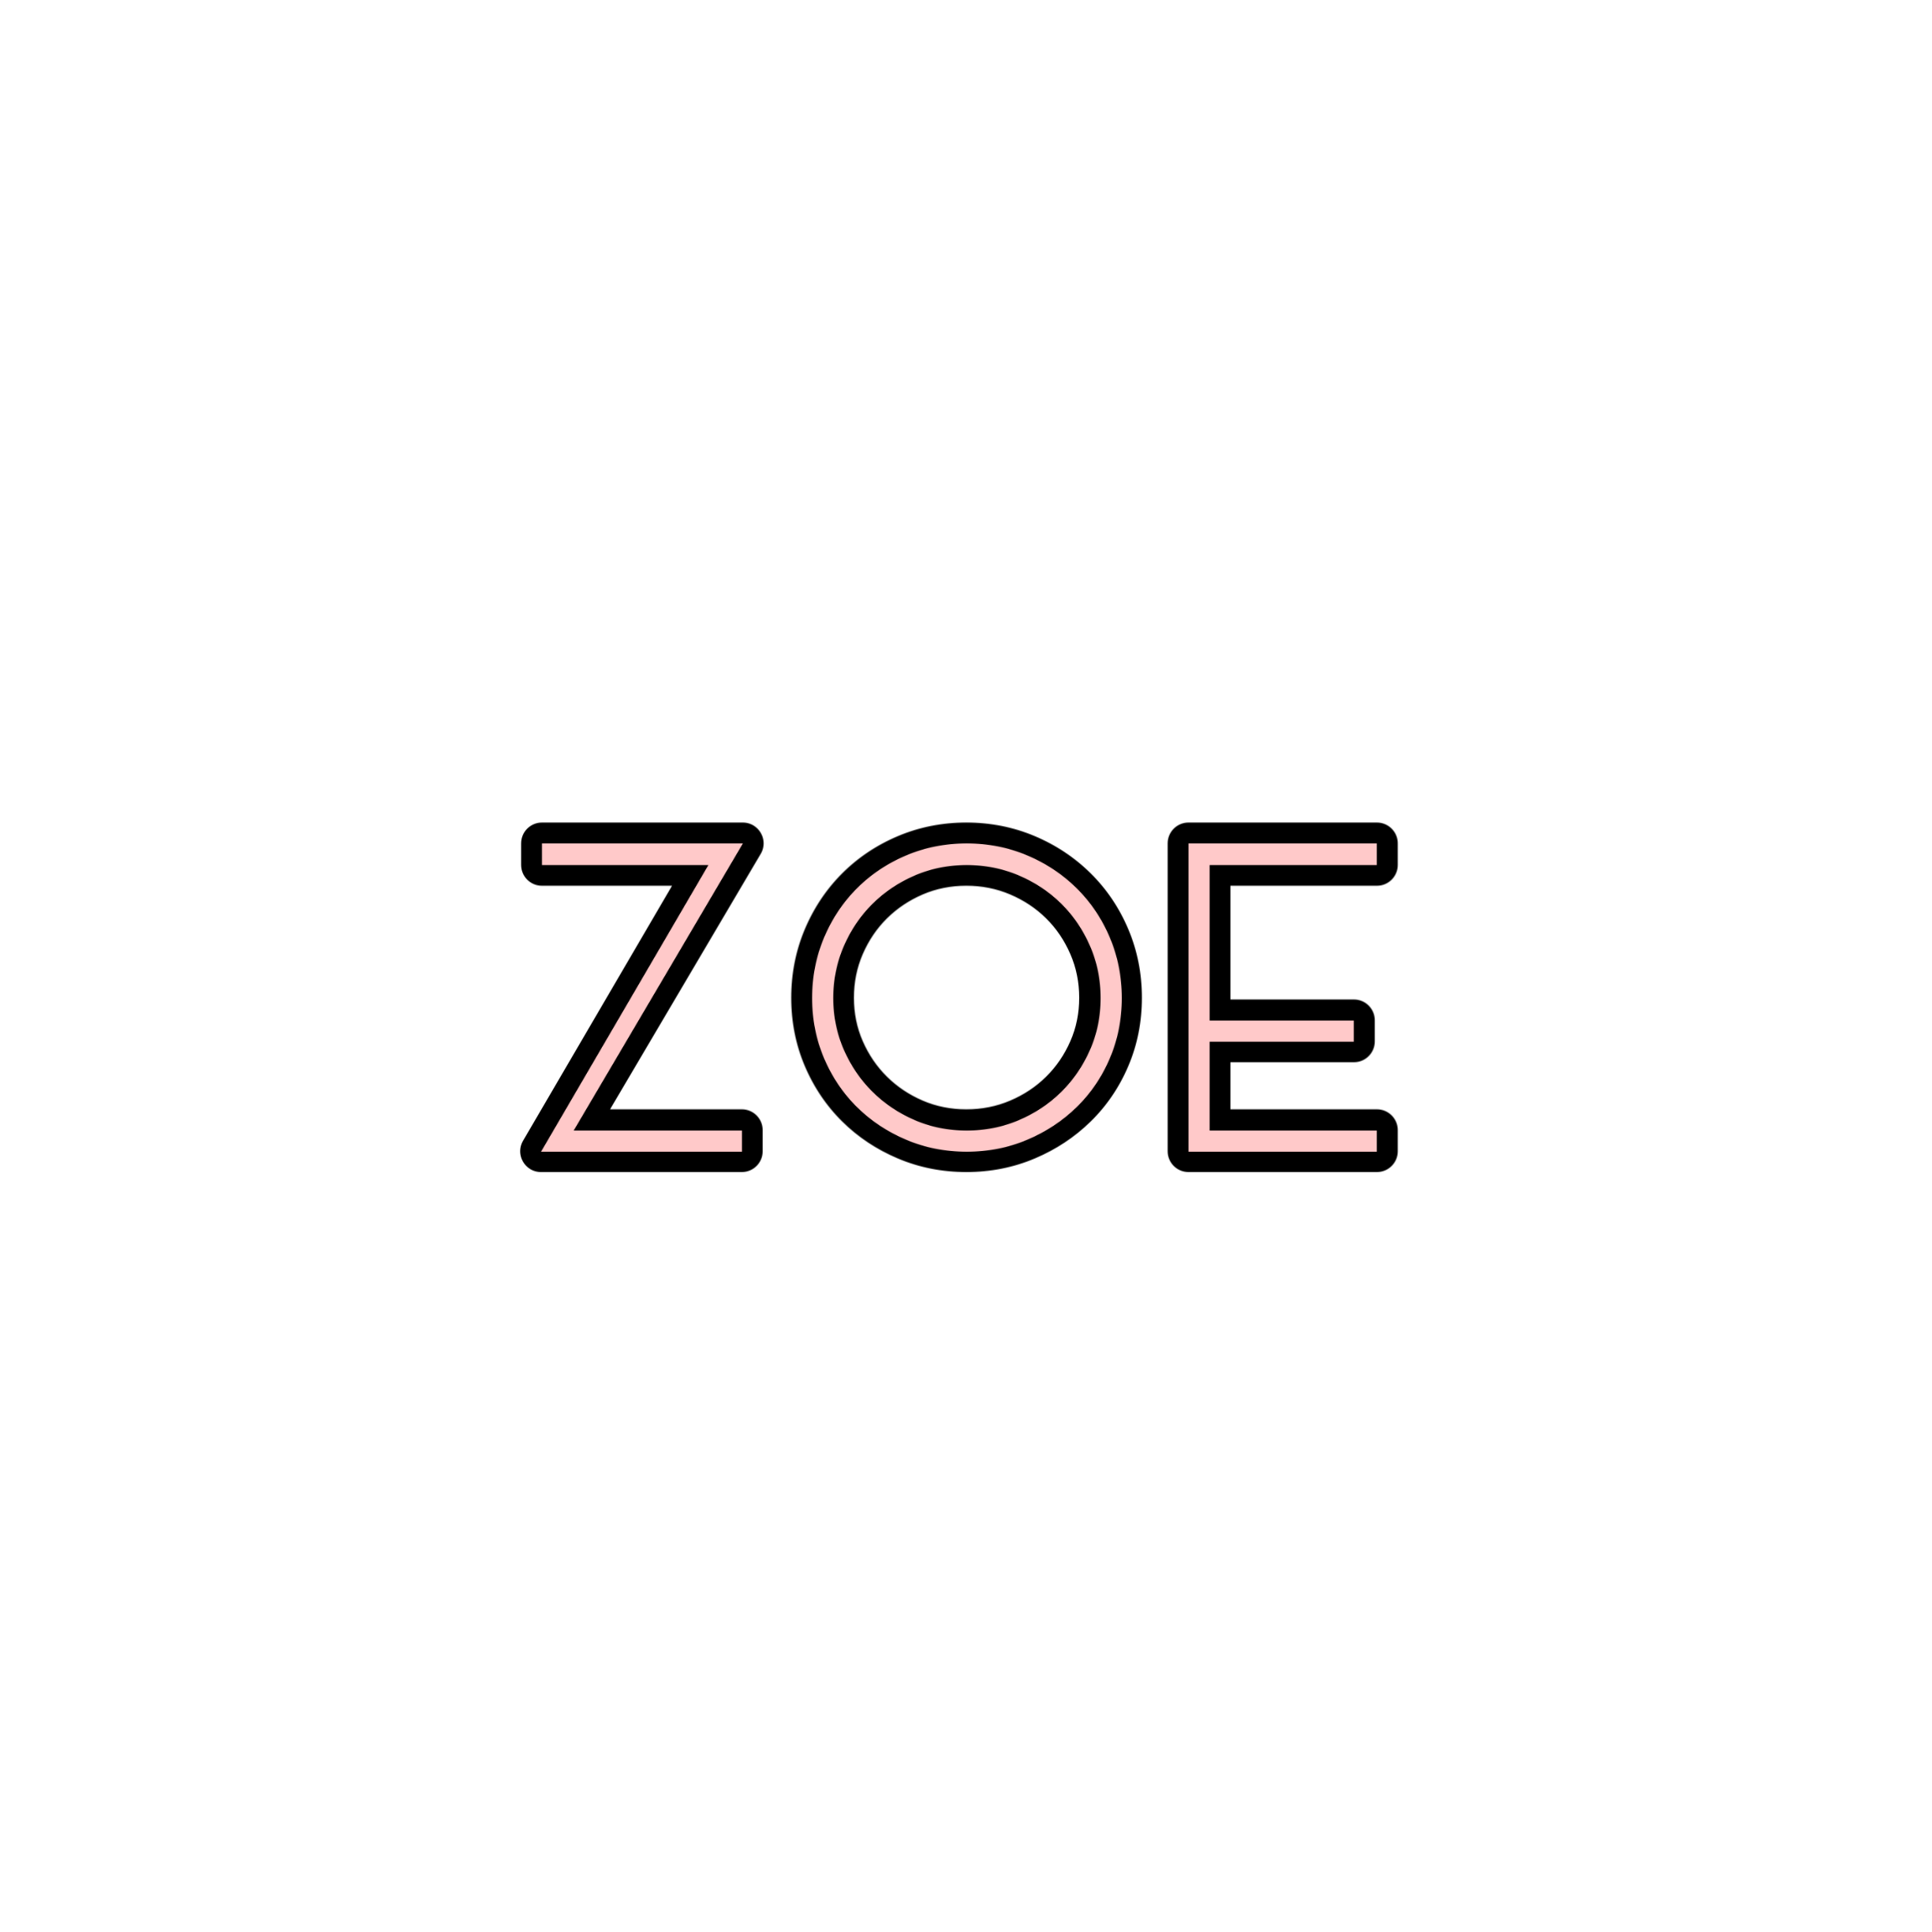 zoe name cute freetoedit #zoe #name sticker by @keacharmy